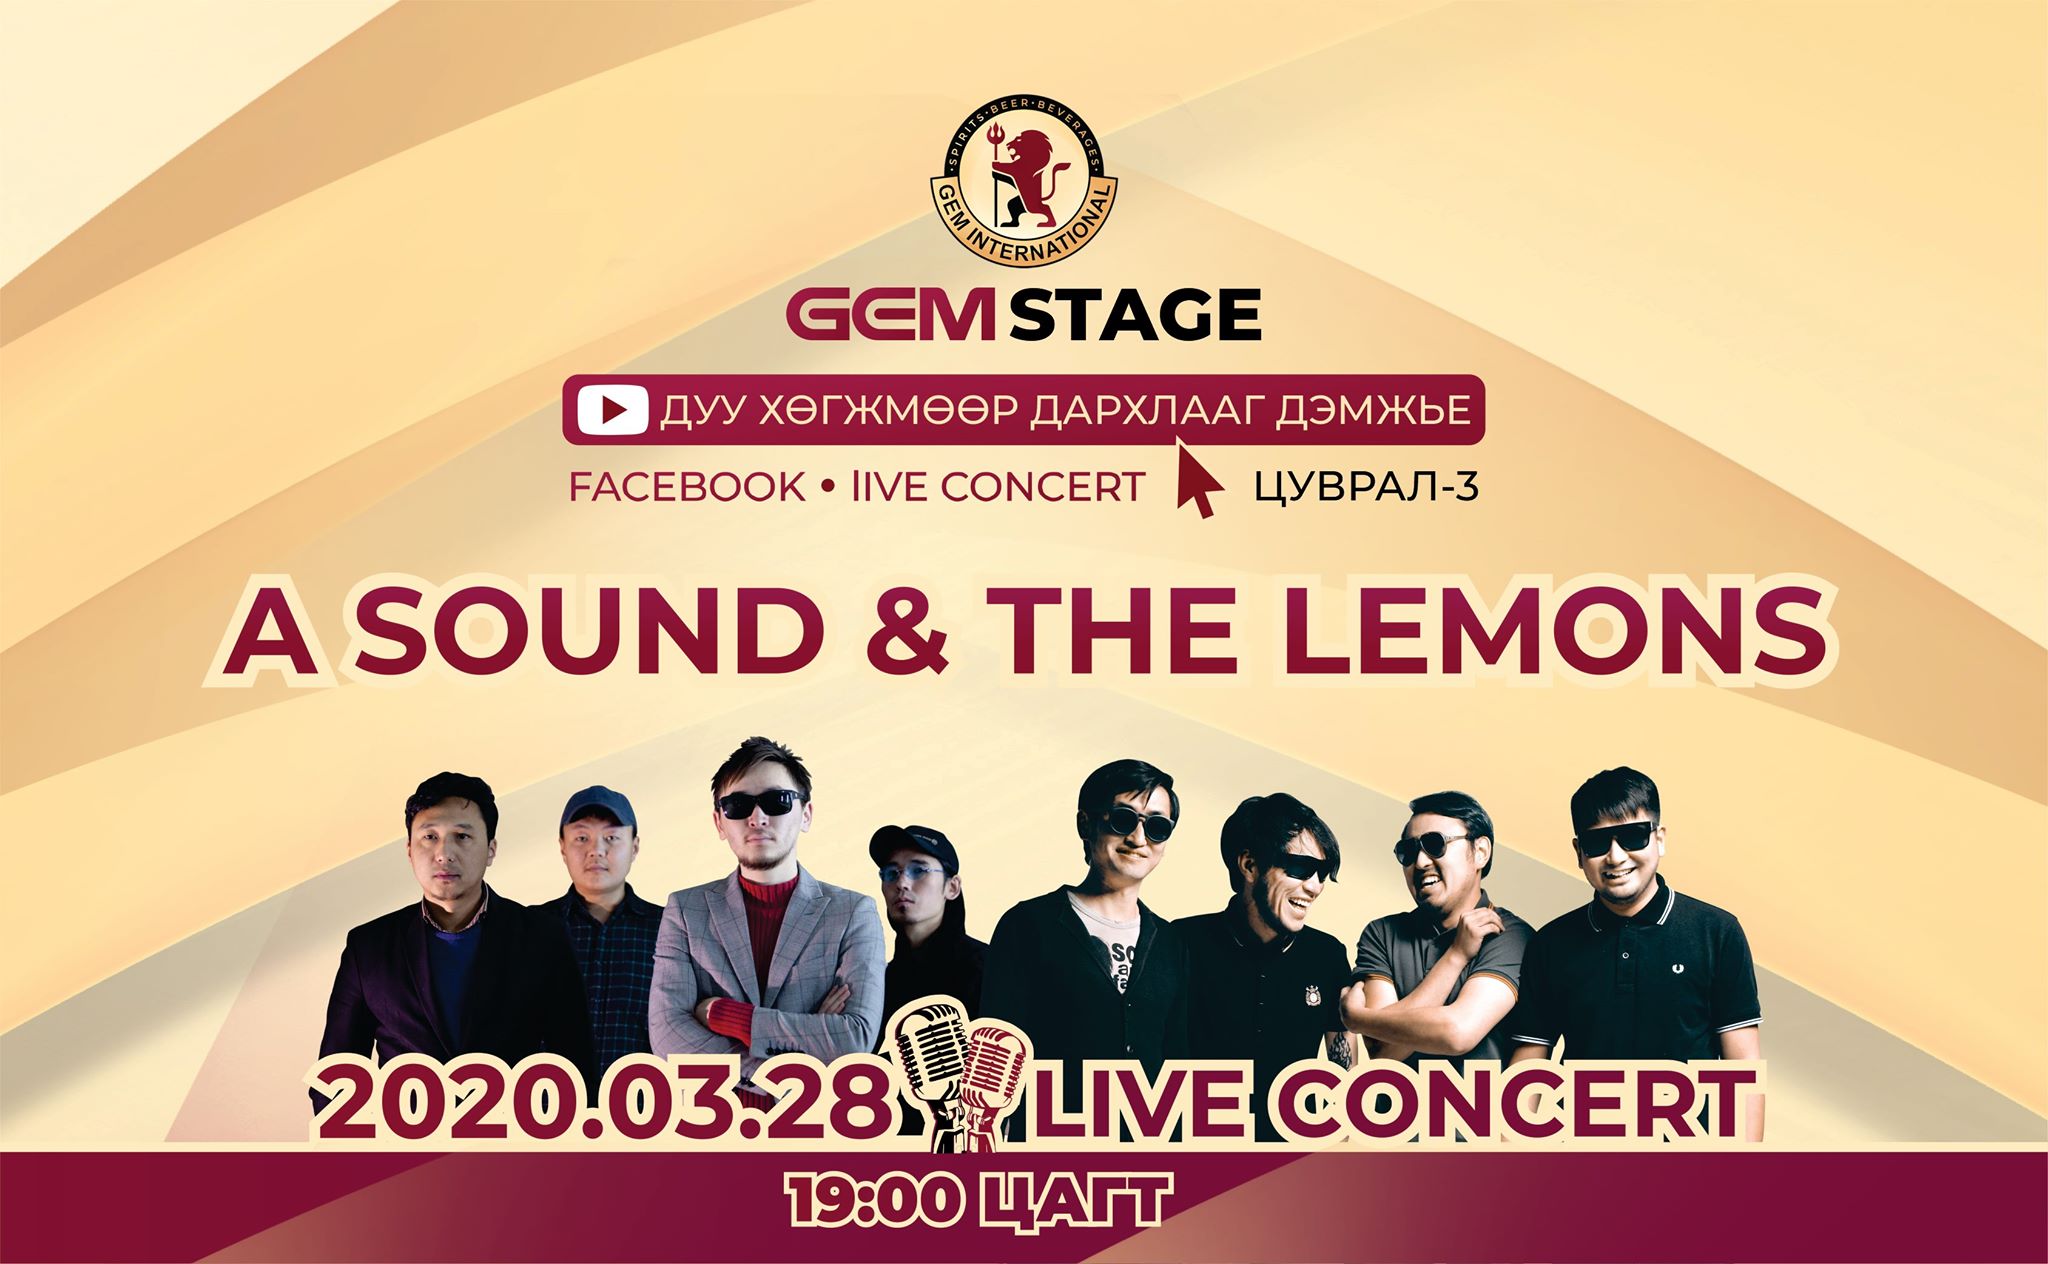 “Gem Stage” Live онлайн цуврал тоглолтонд A SOUND, THE LEMONS оролцоно